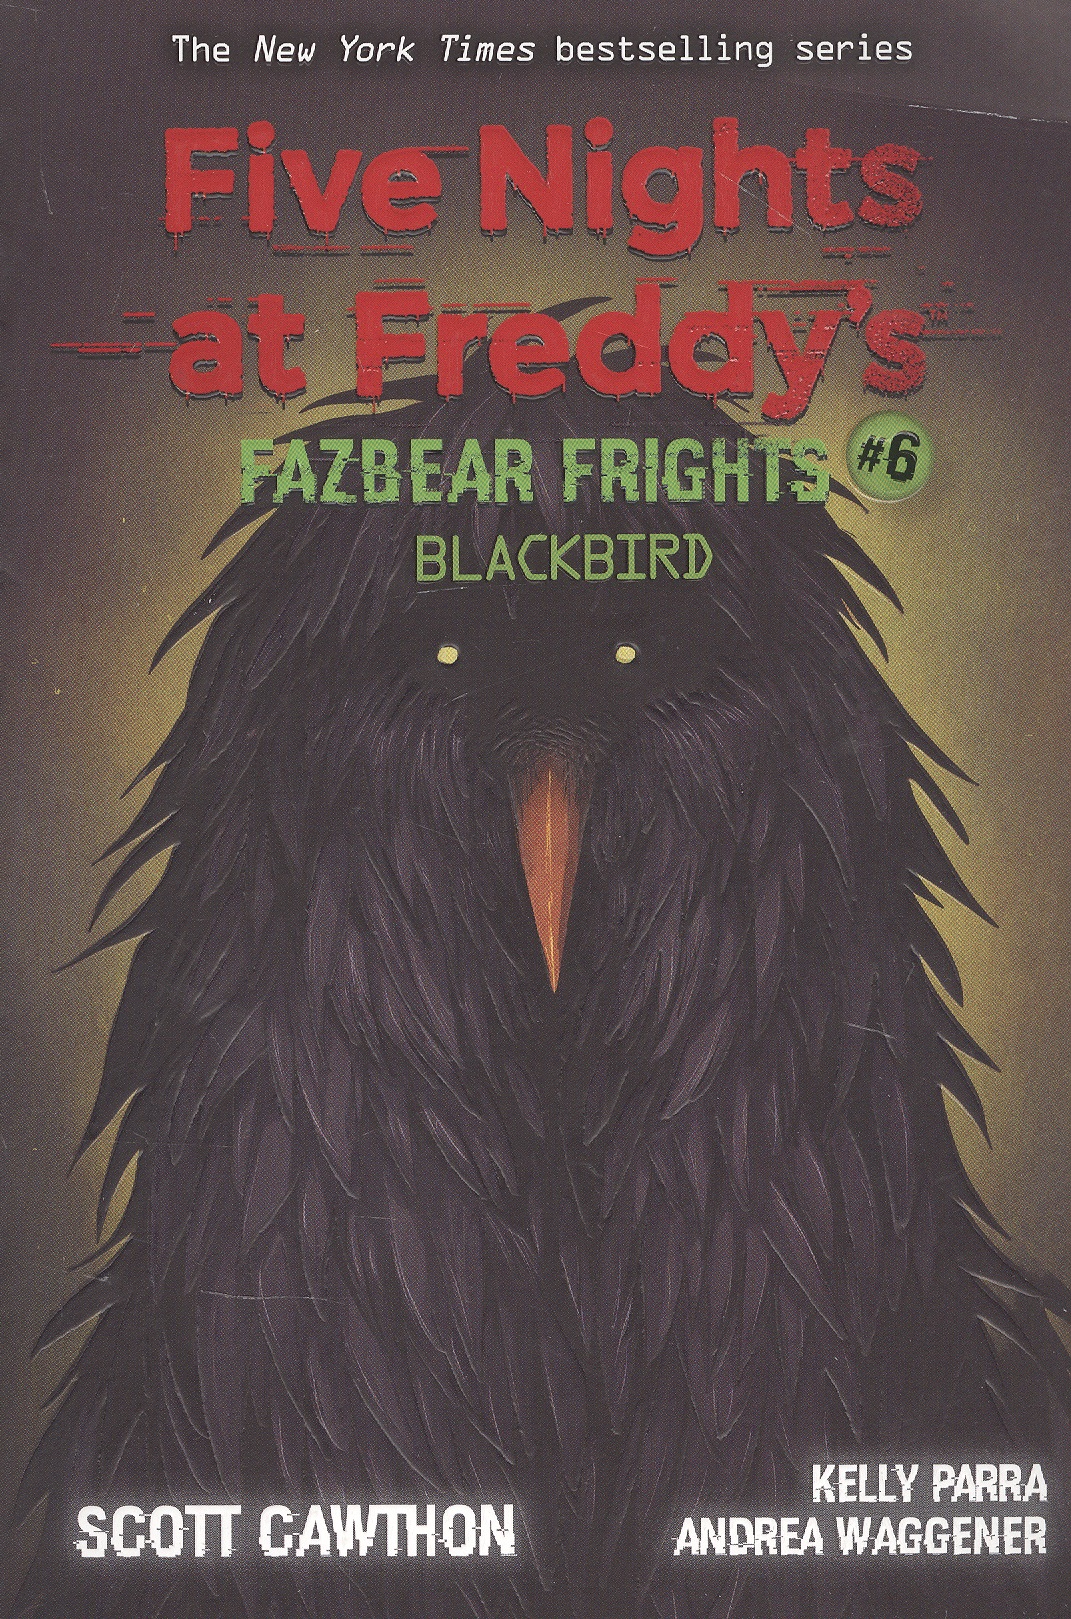 Five nights at freddys: Fazbear Frights #6. Blackbird